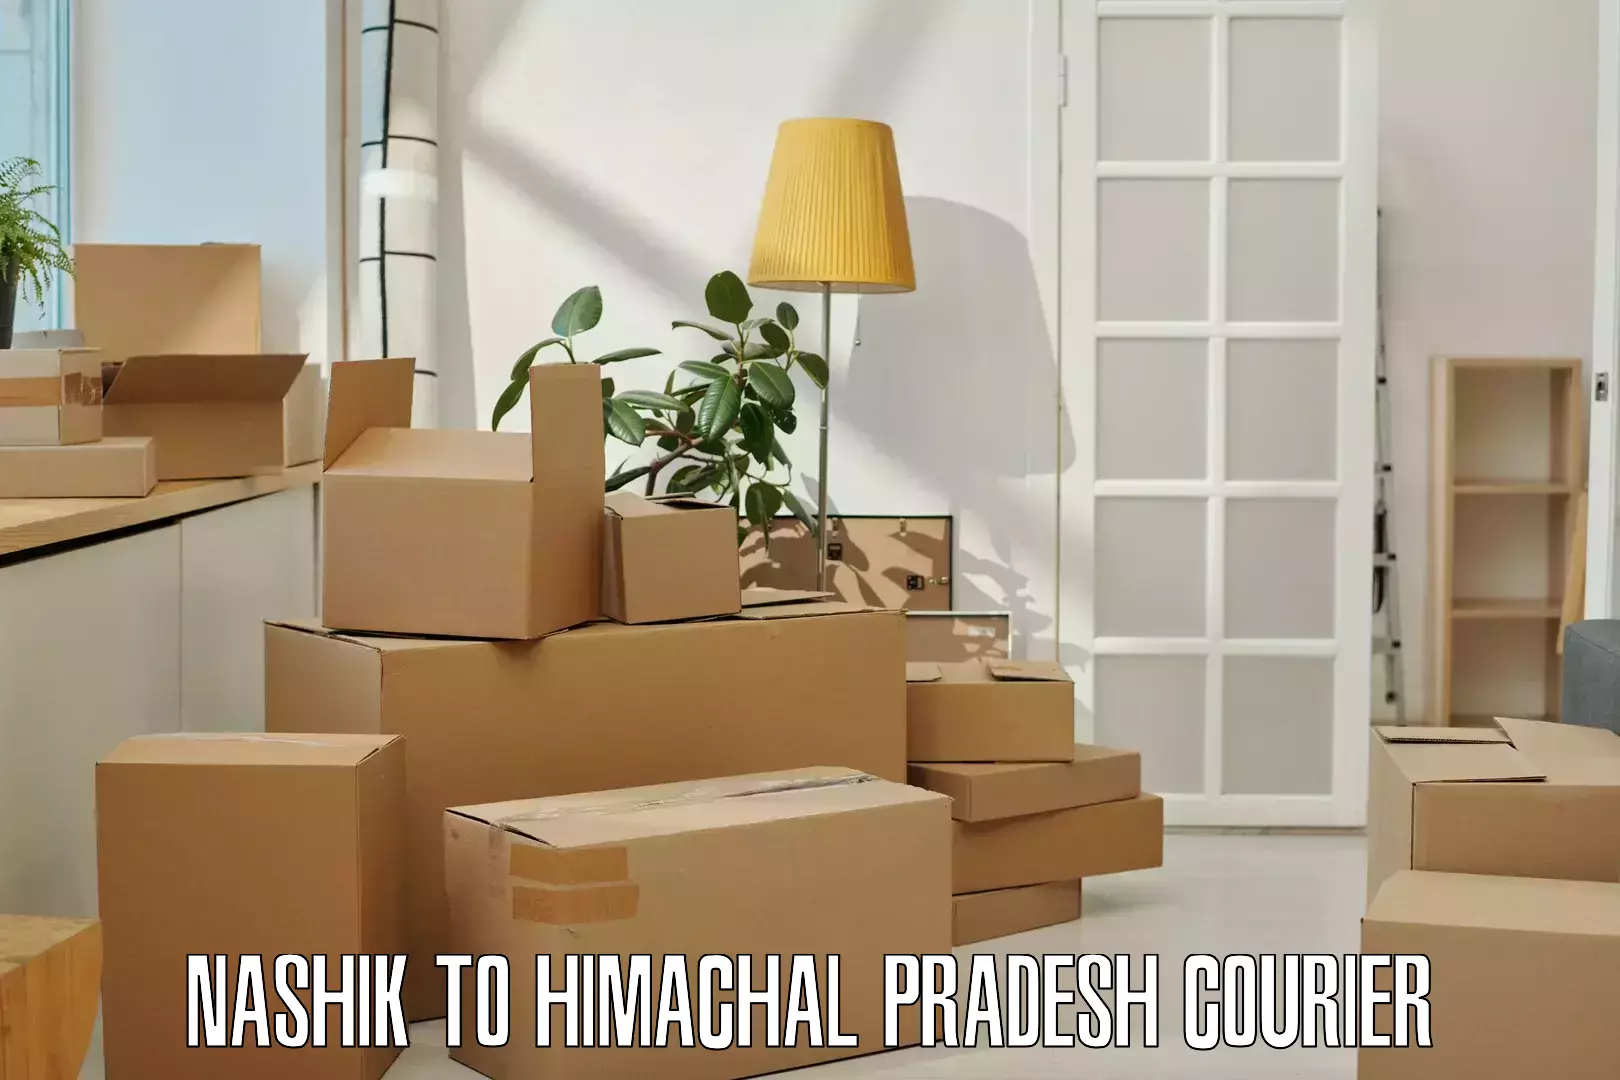 Courier service partnerships Nashik to Himachal Pradesh